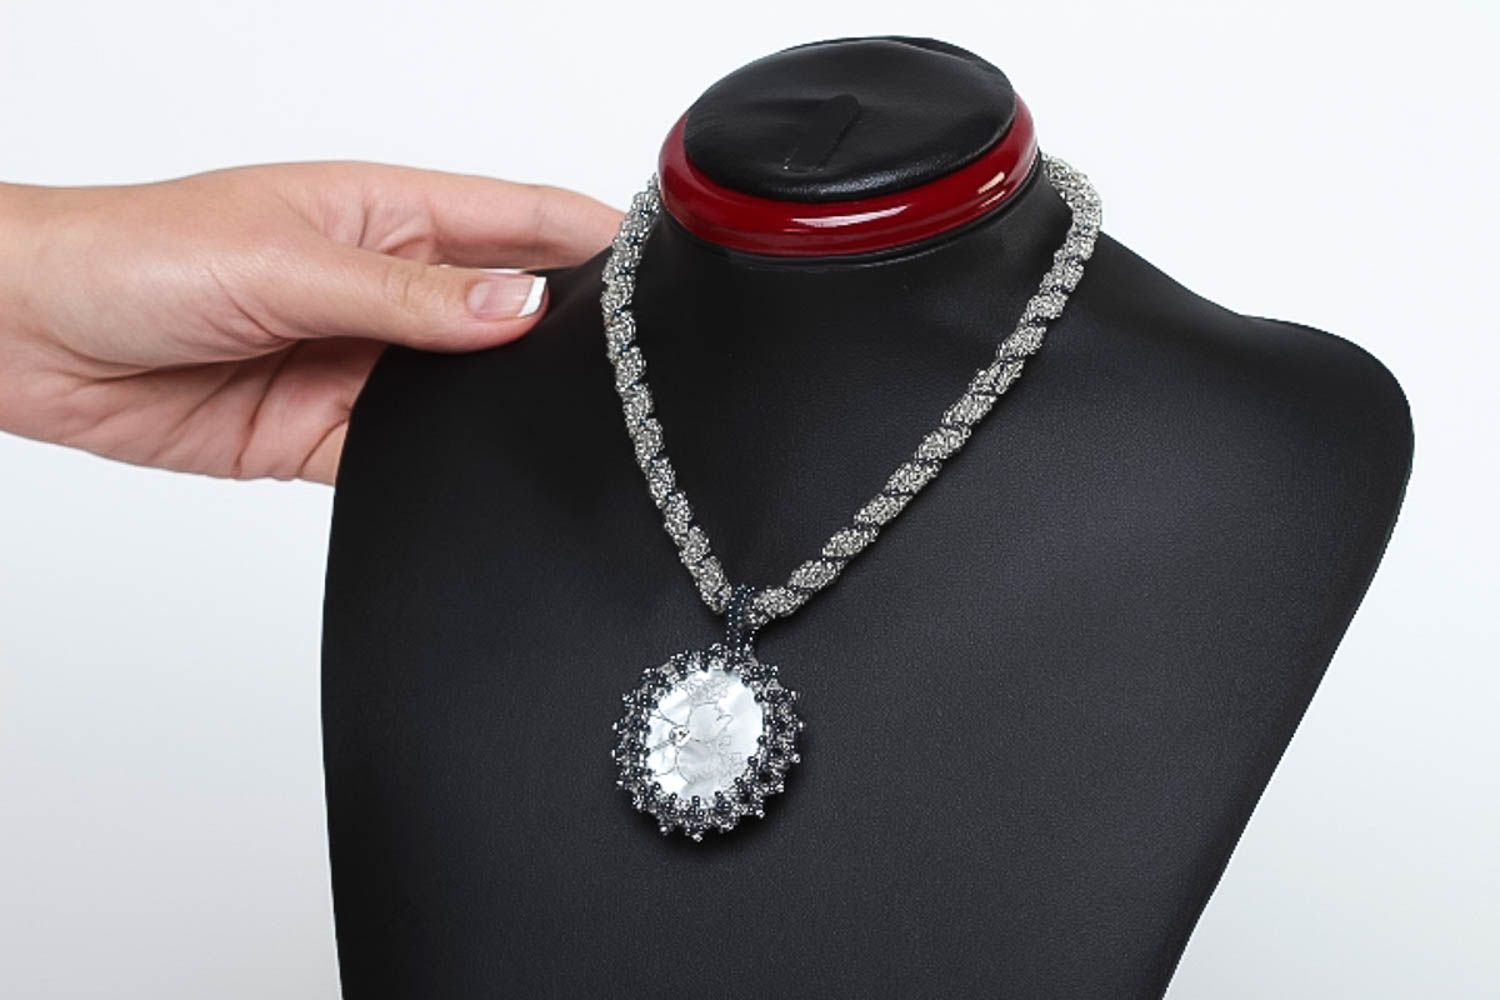 Unusual handmade pendant necklace neck pendant beaded necklace gift ideas photo 5